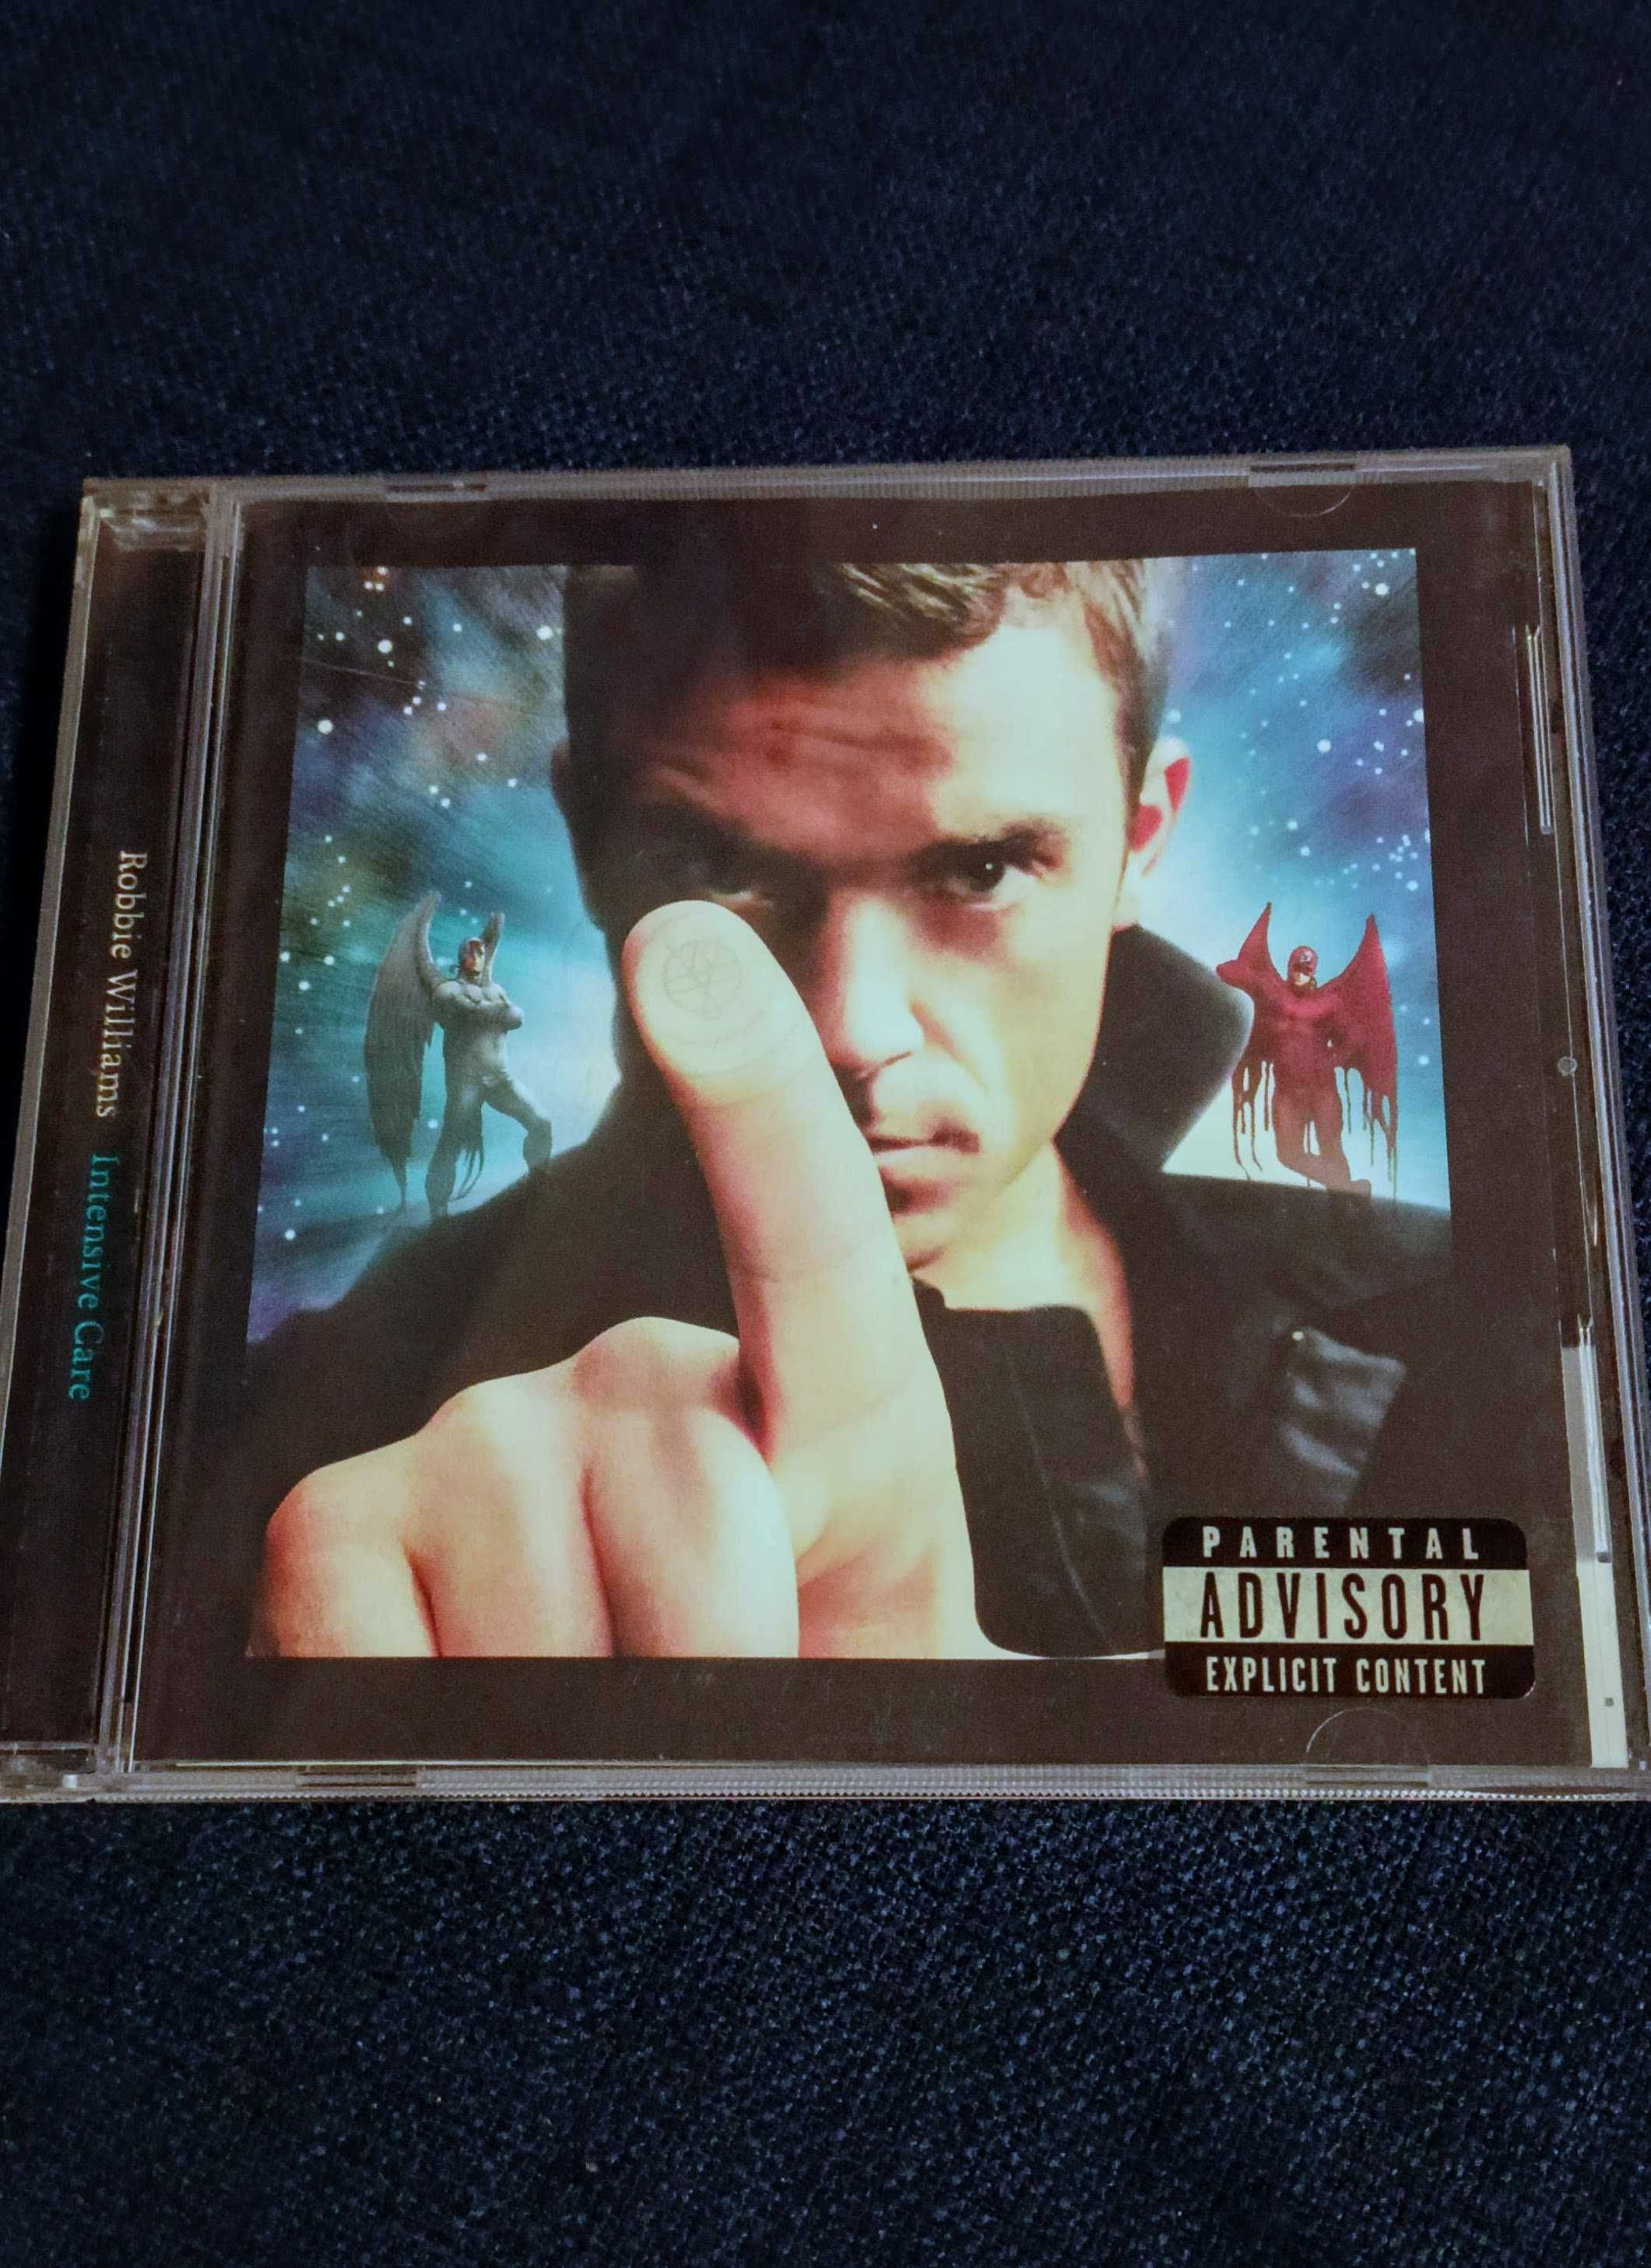 Robbie Williams "Intensive Care" CD